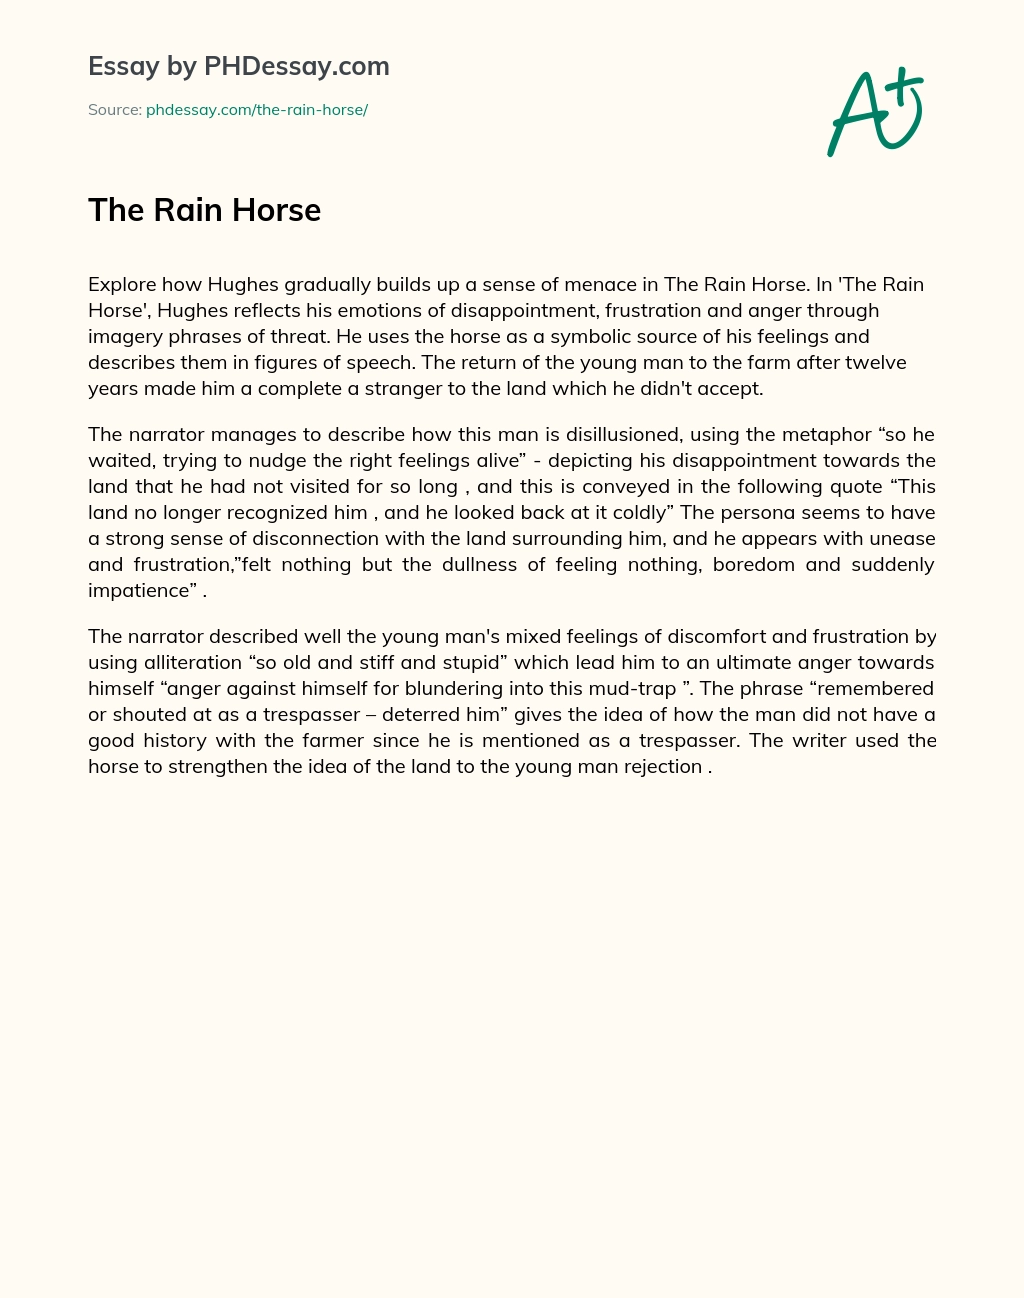 The Rain Horse essay